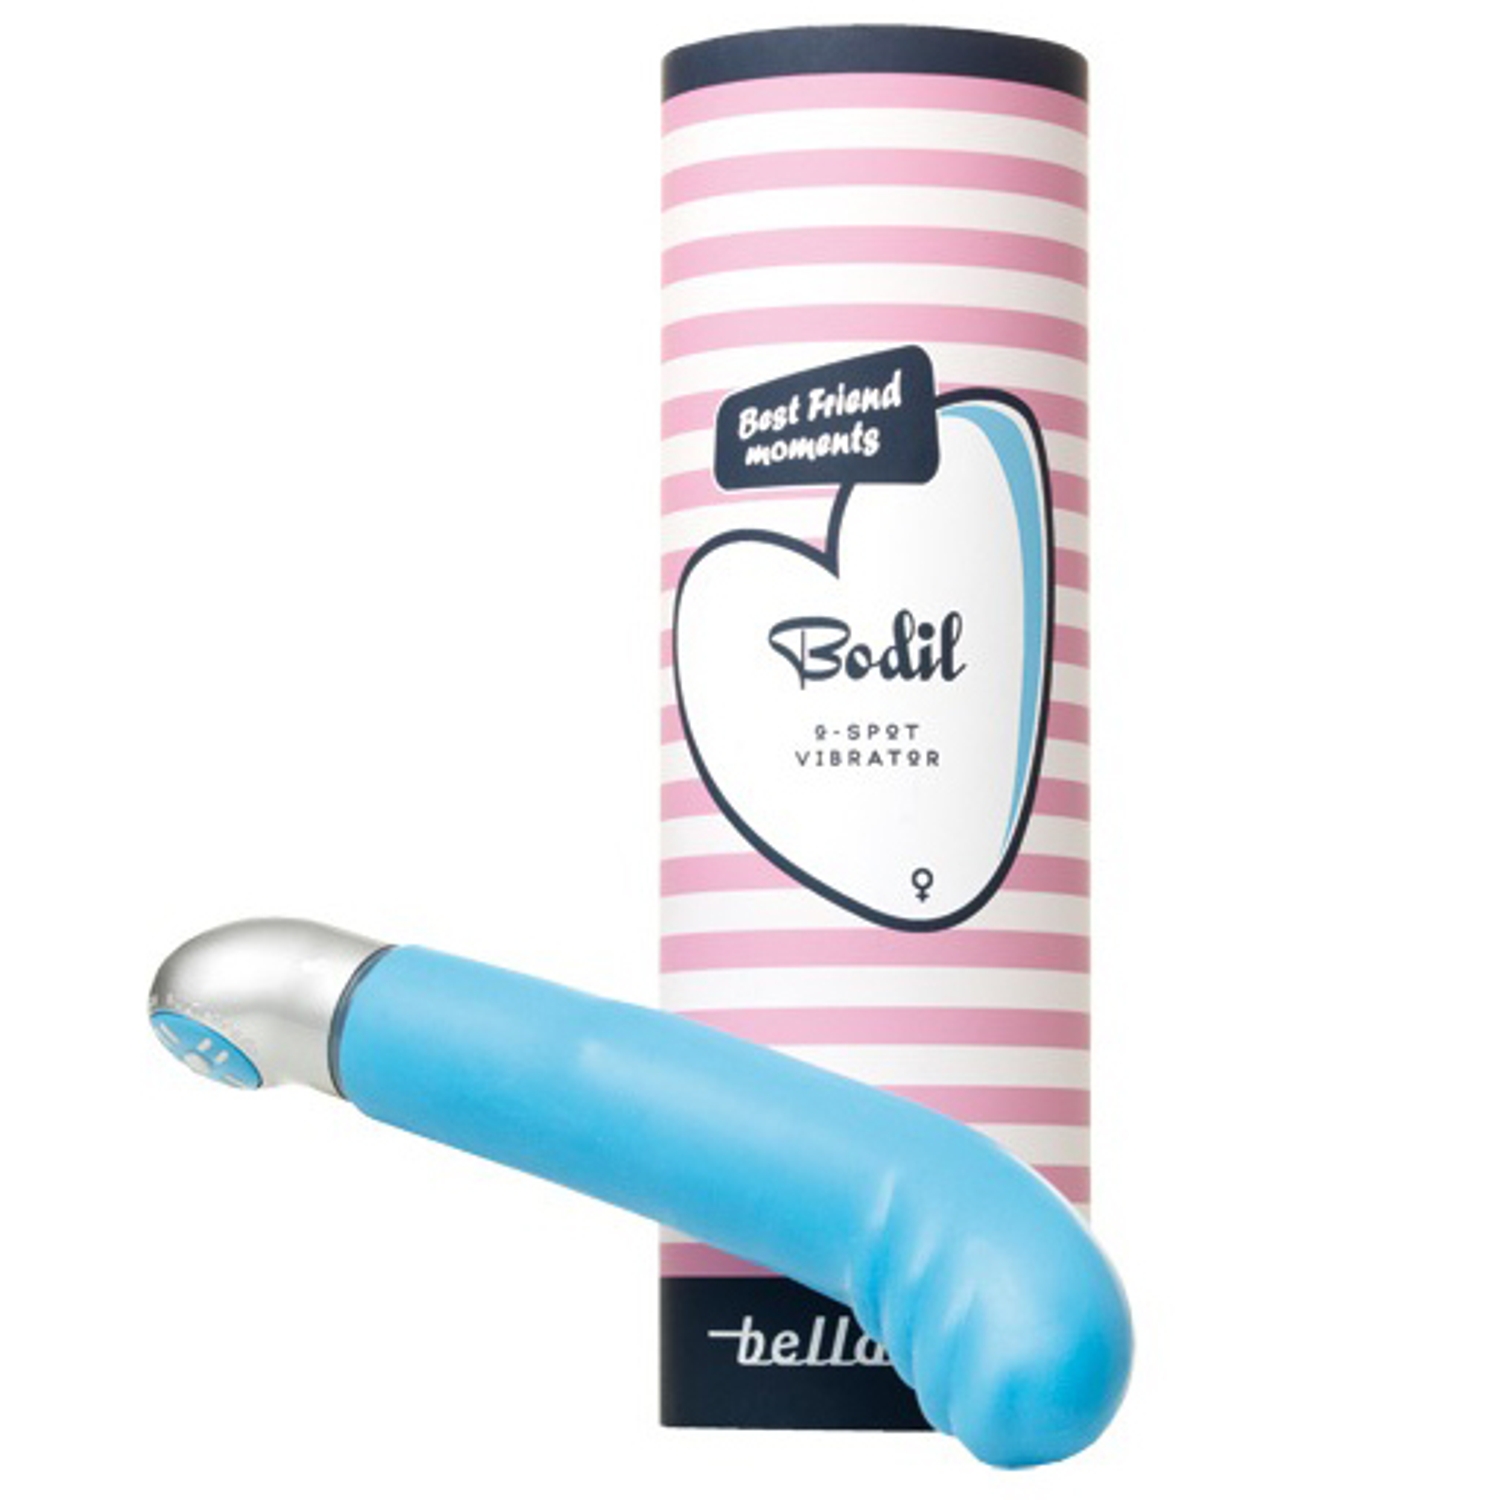 Belladot Bodil G-punkts Vibrator - Blå